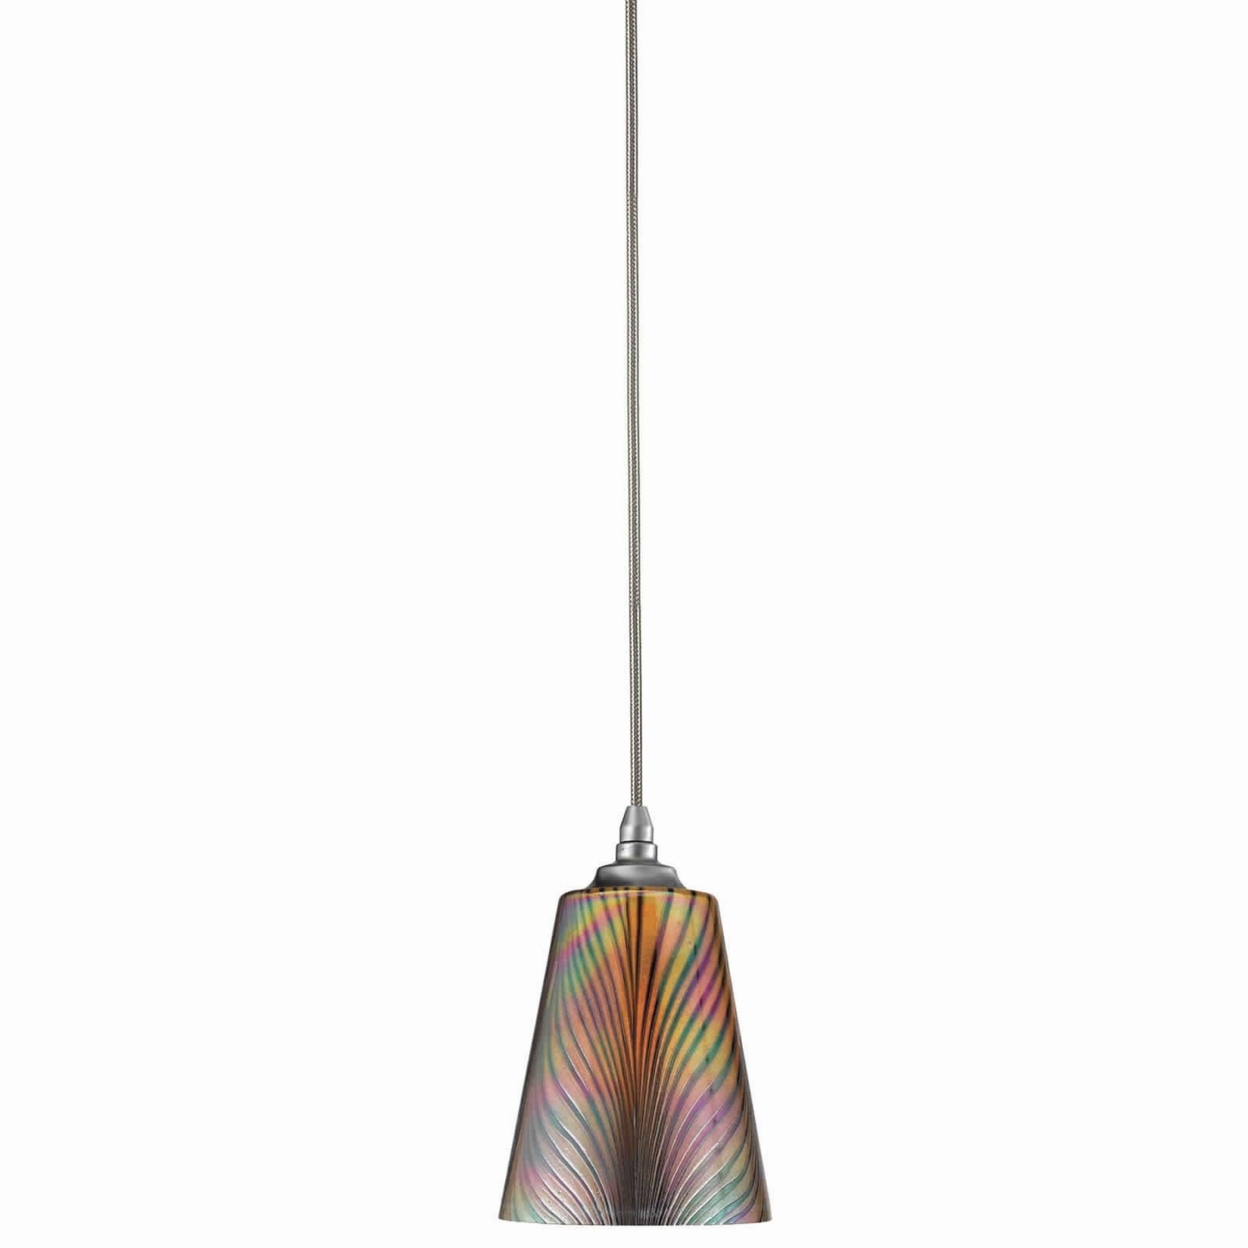 Tapered Design Glass Shade Pendant Lighting With Canopy, Multicolor- Saltoro Sherpi